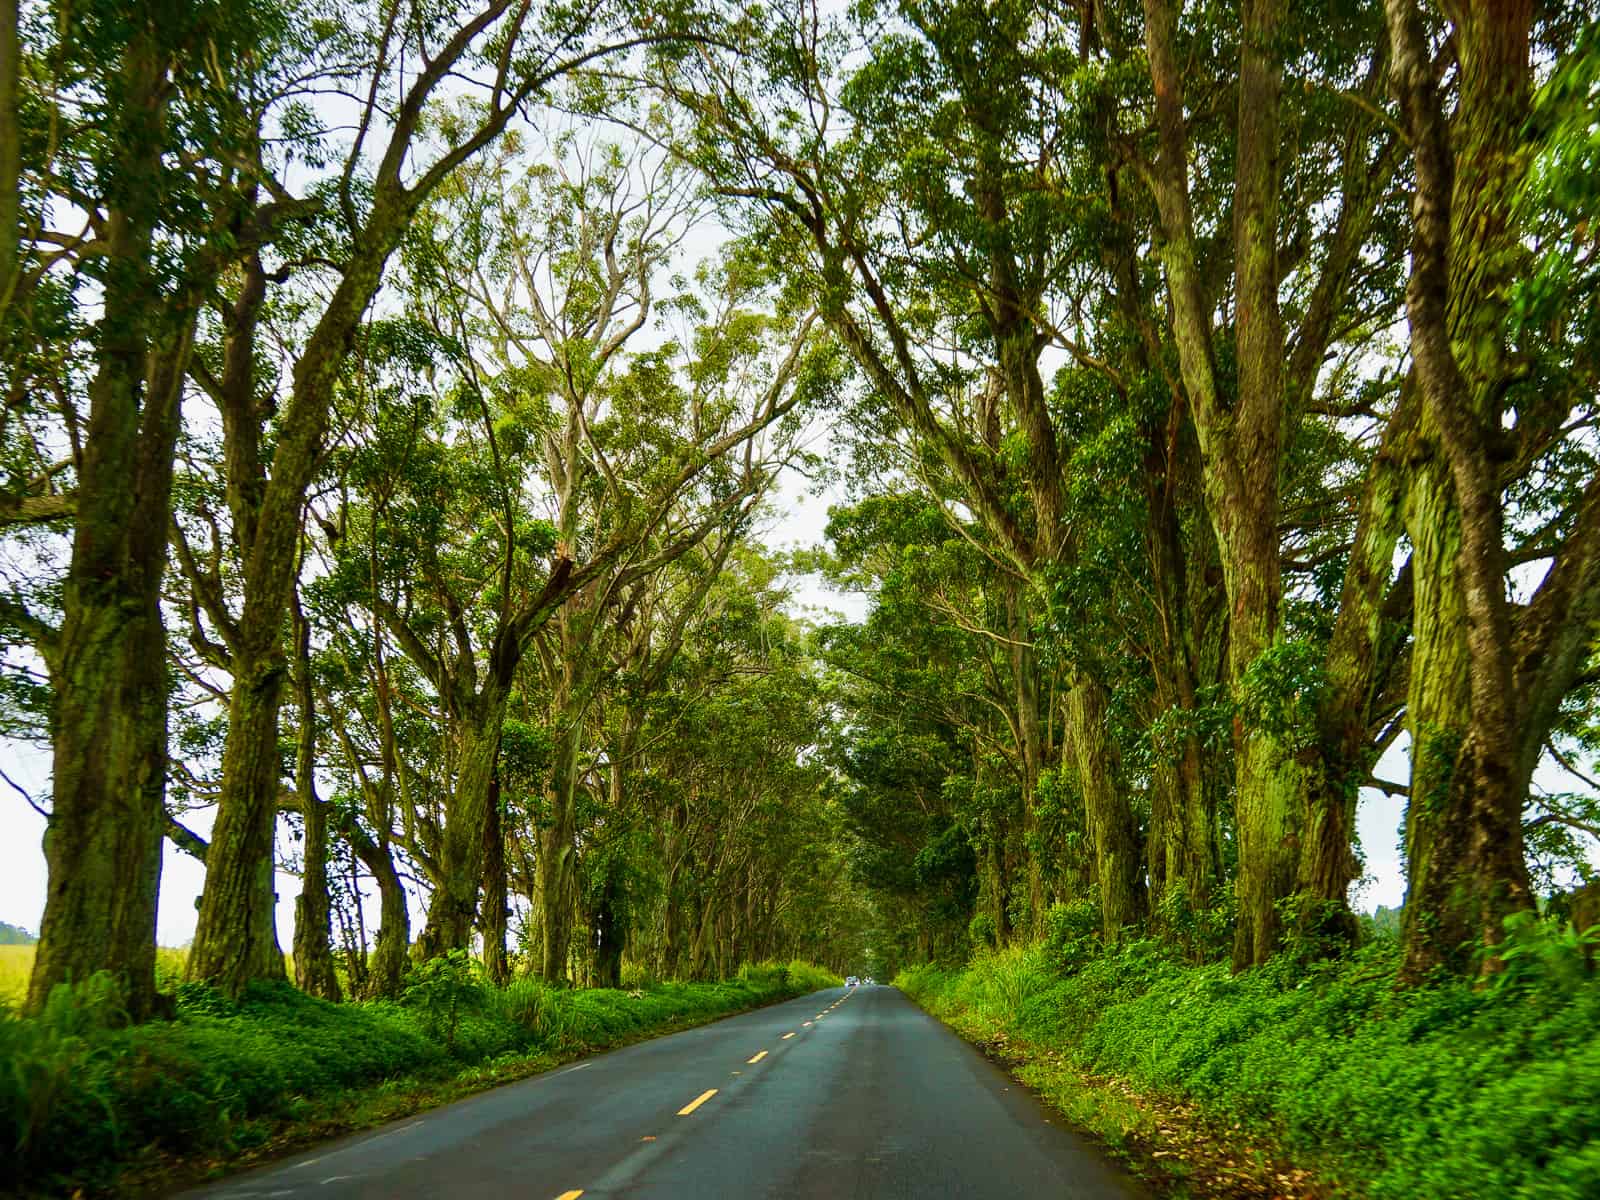 Row of eucalyptus trees